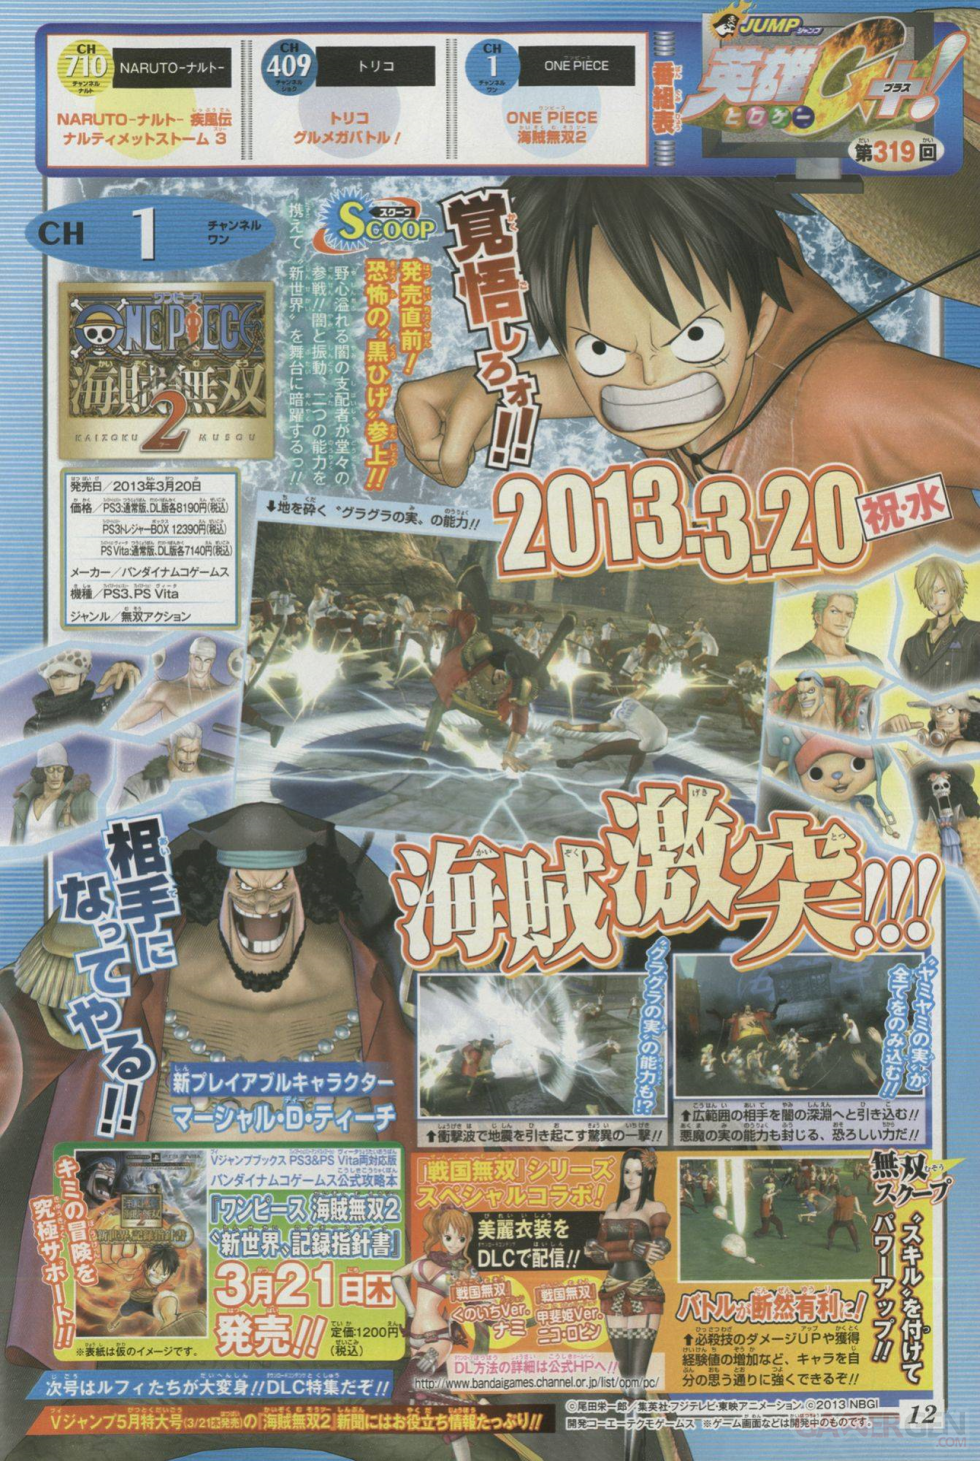 One Piece Pirate Warriors 2 screenshot 13032013